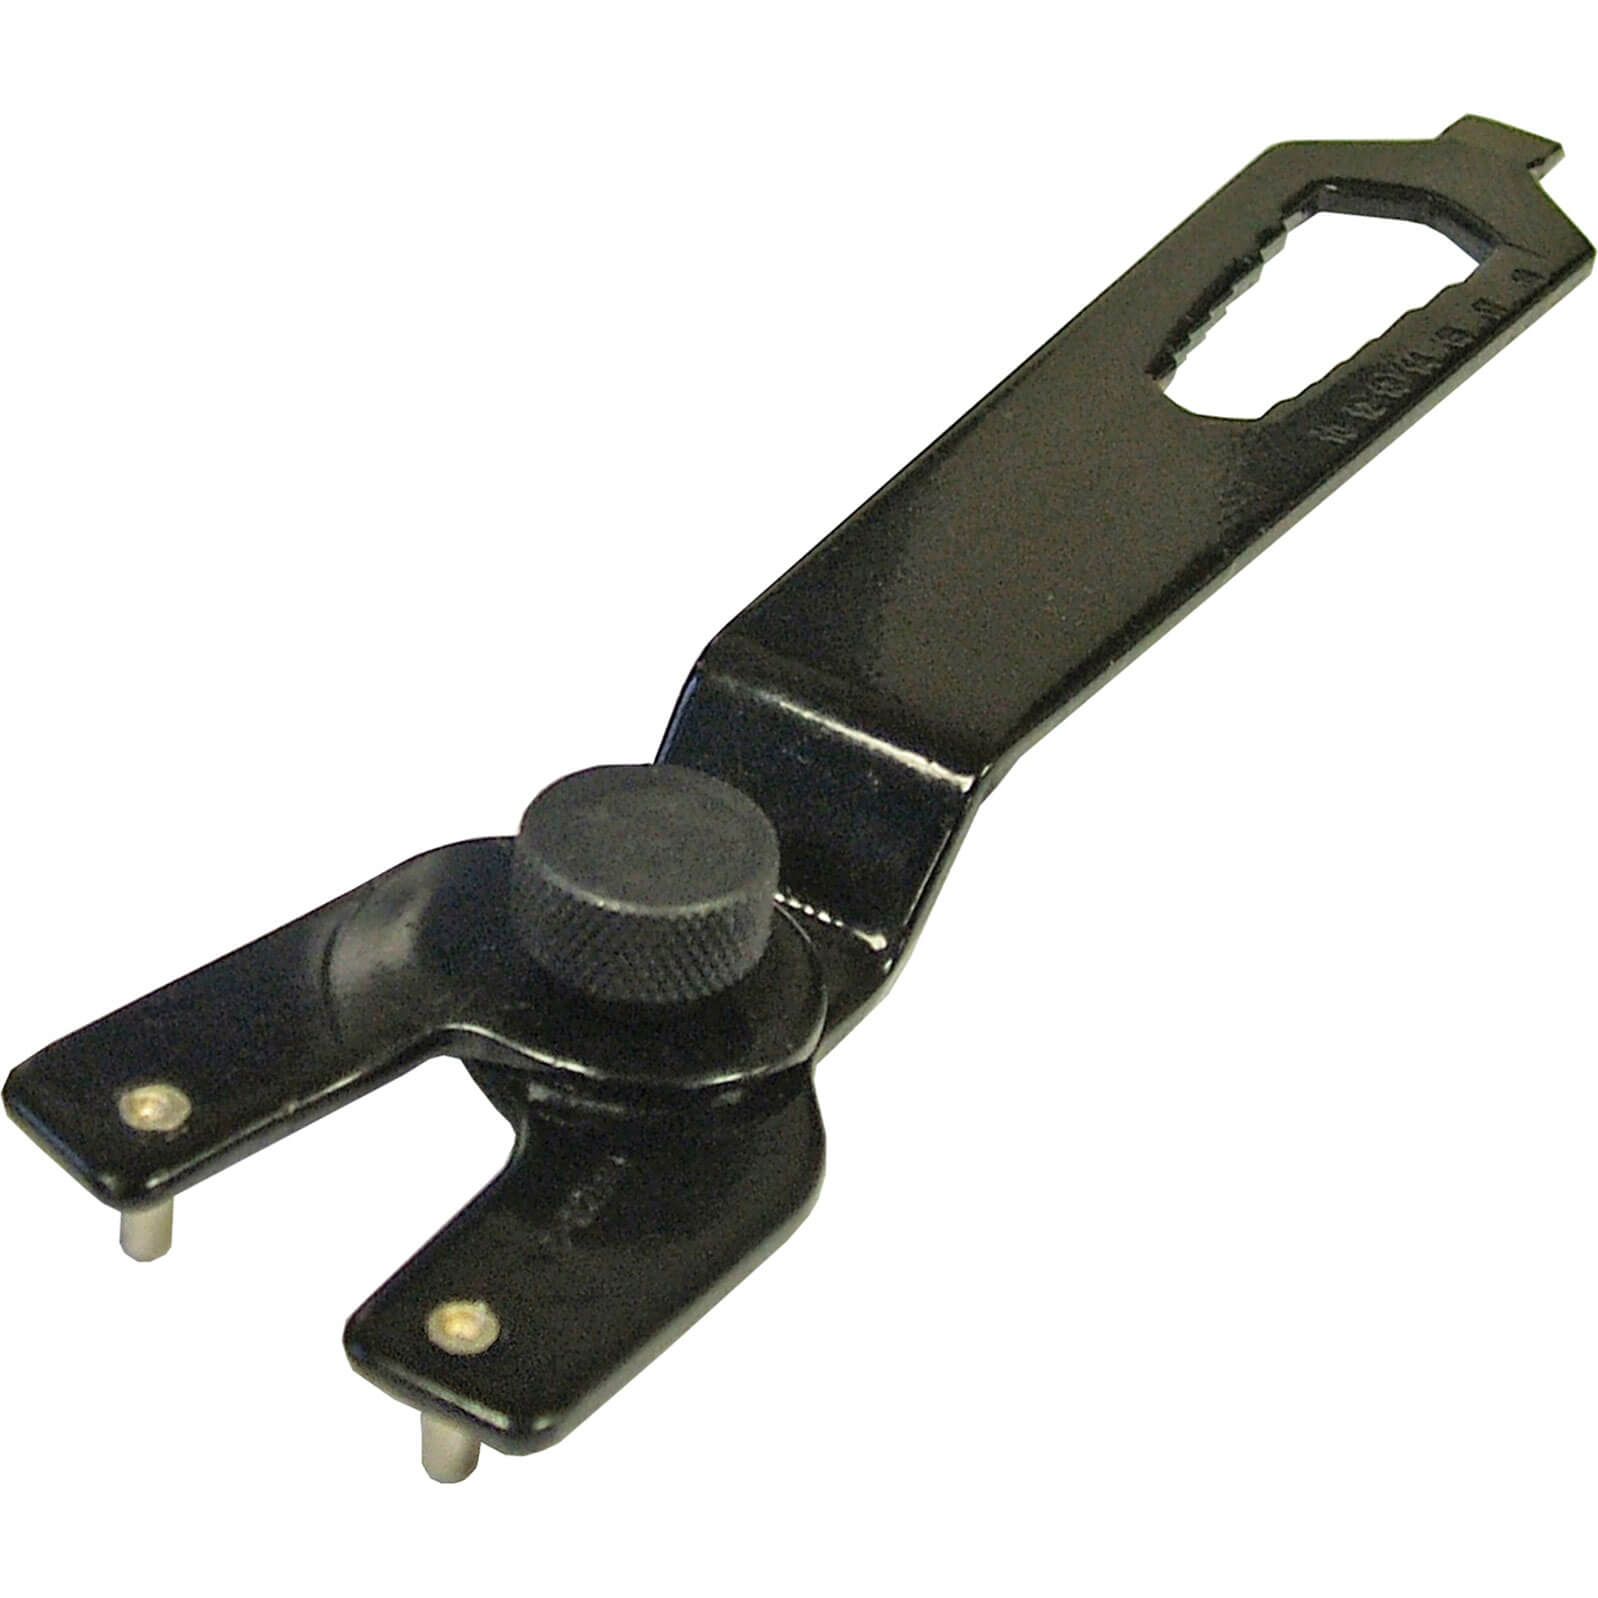 Photo of Faithfull Adjustable Pin Key For Angle Grinders